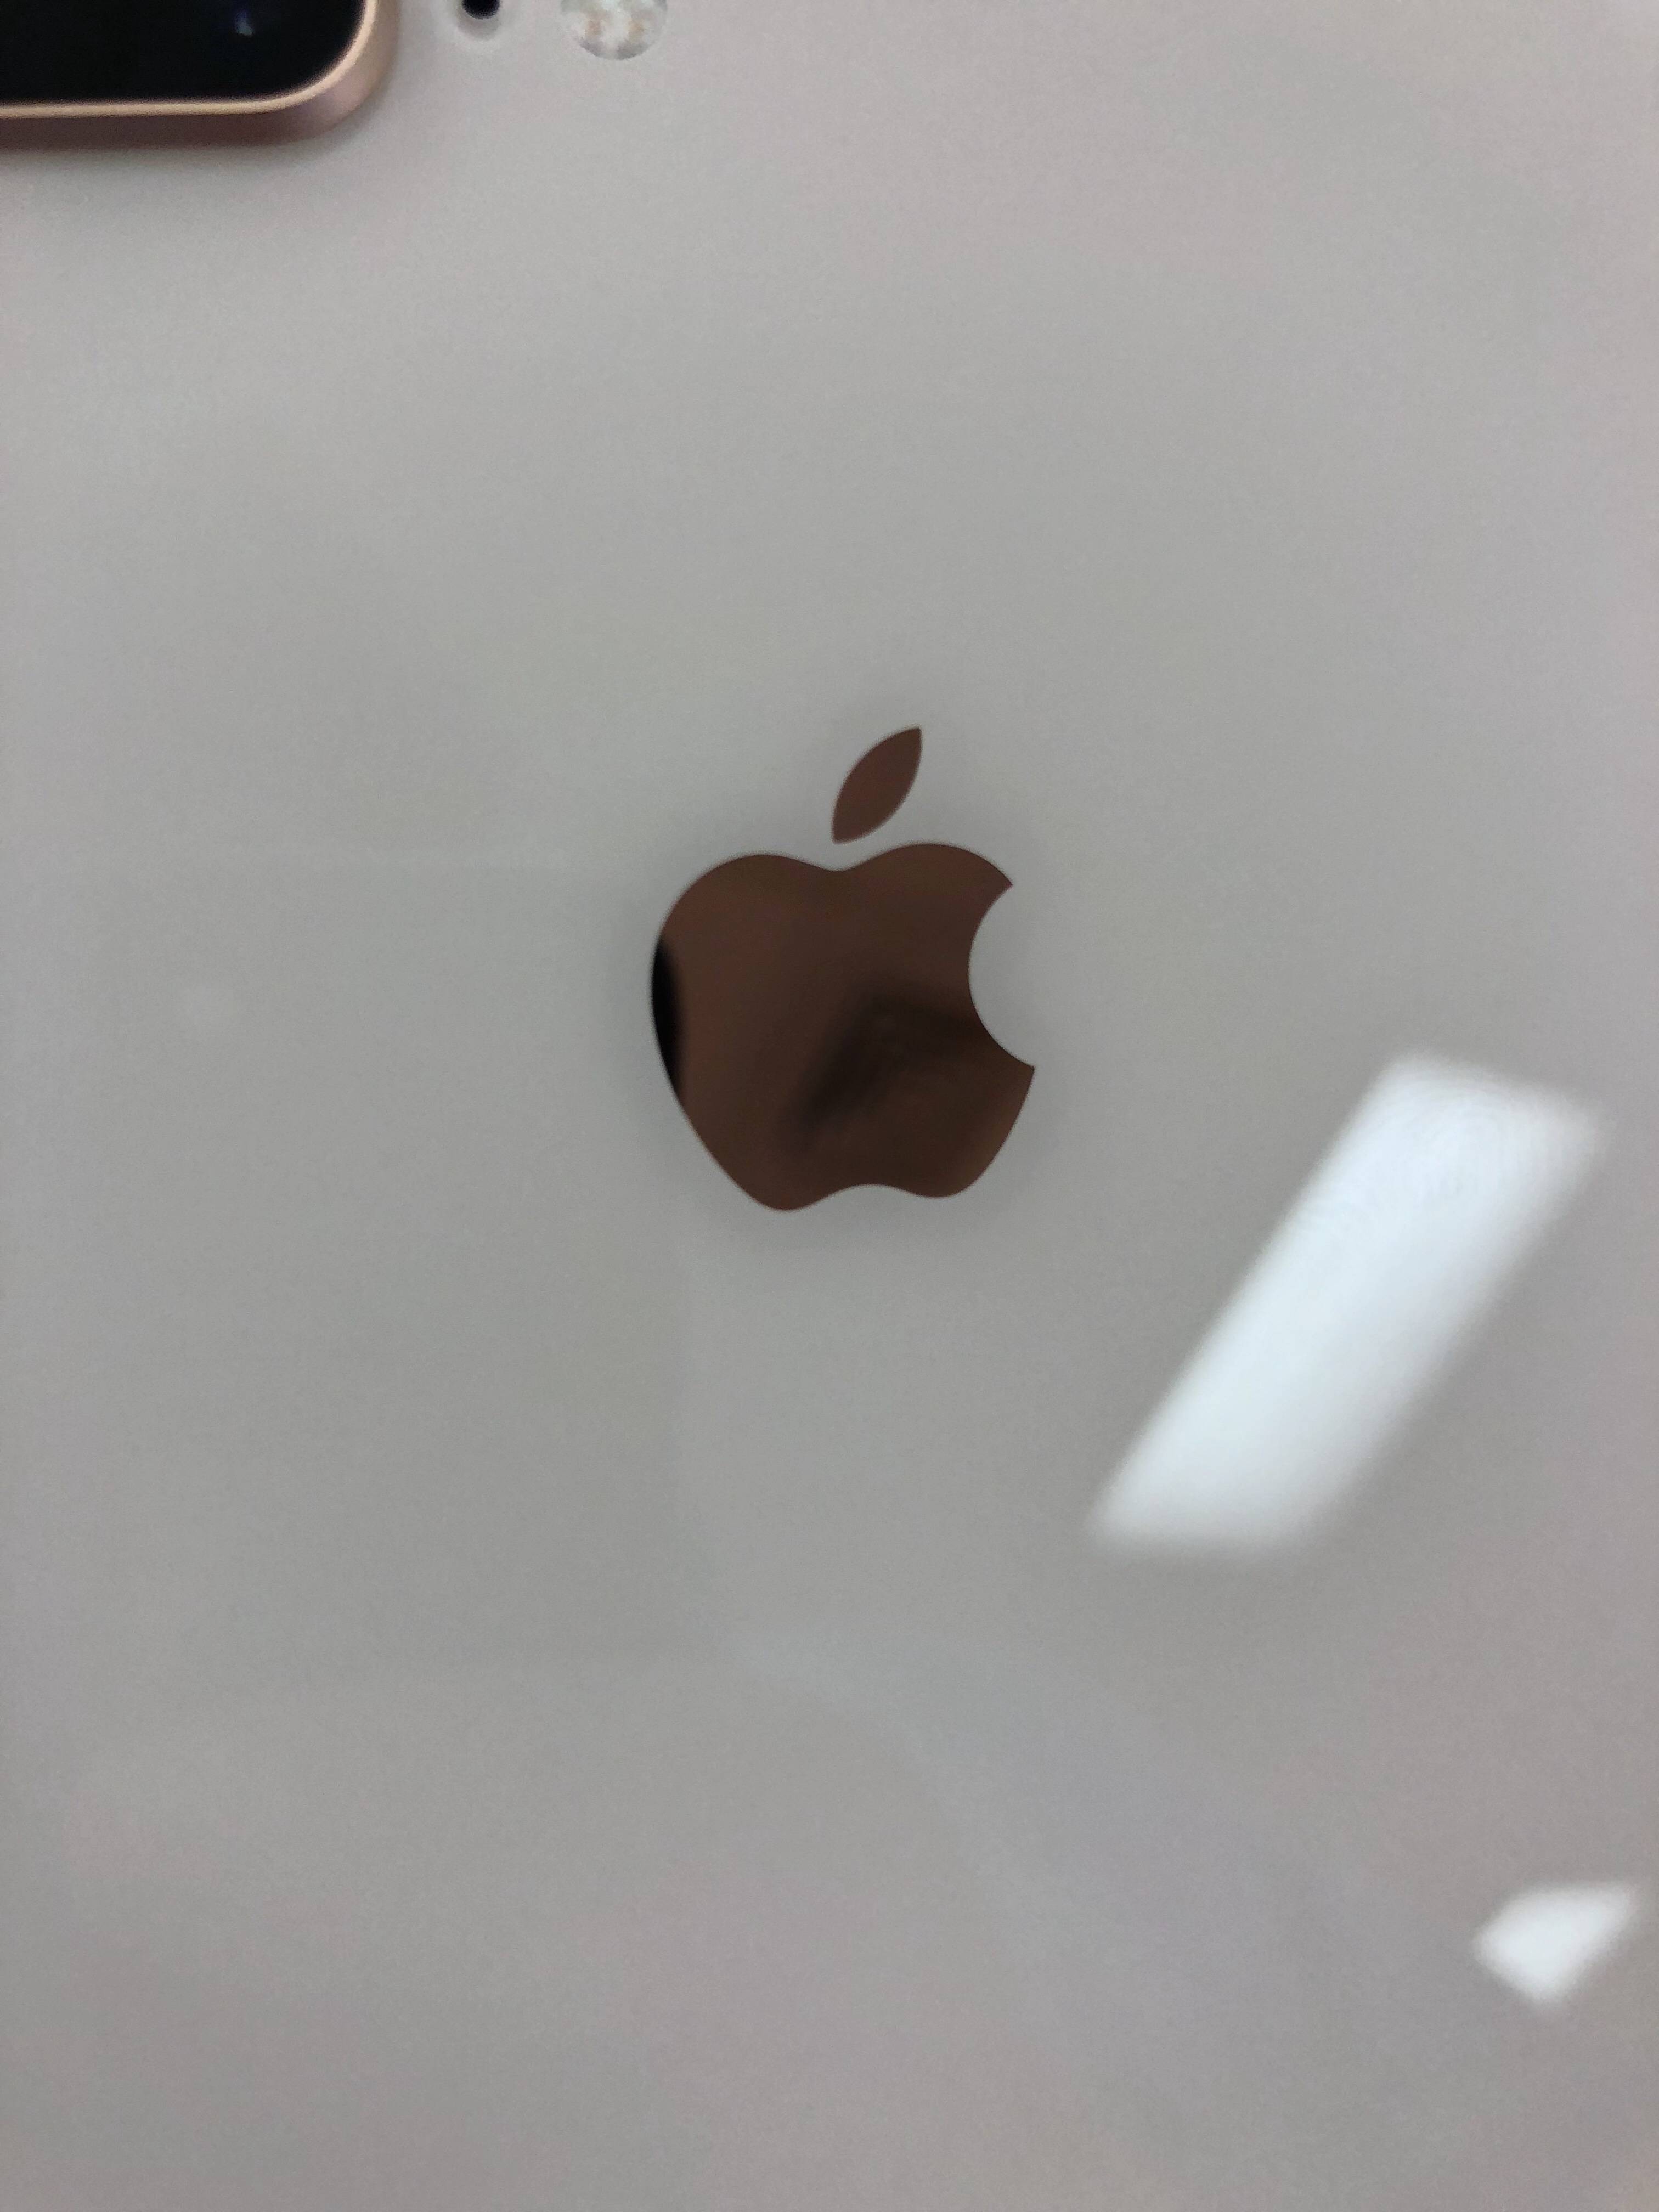 Gold Apple Logo - Anybody else see a weird Apple logo “shadow” behind the Apple on the ...